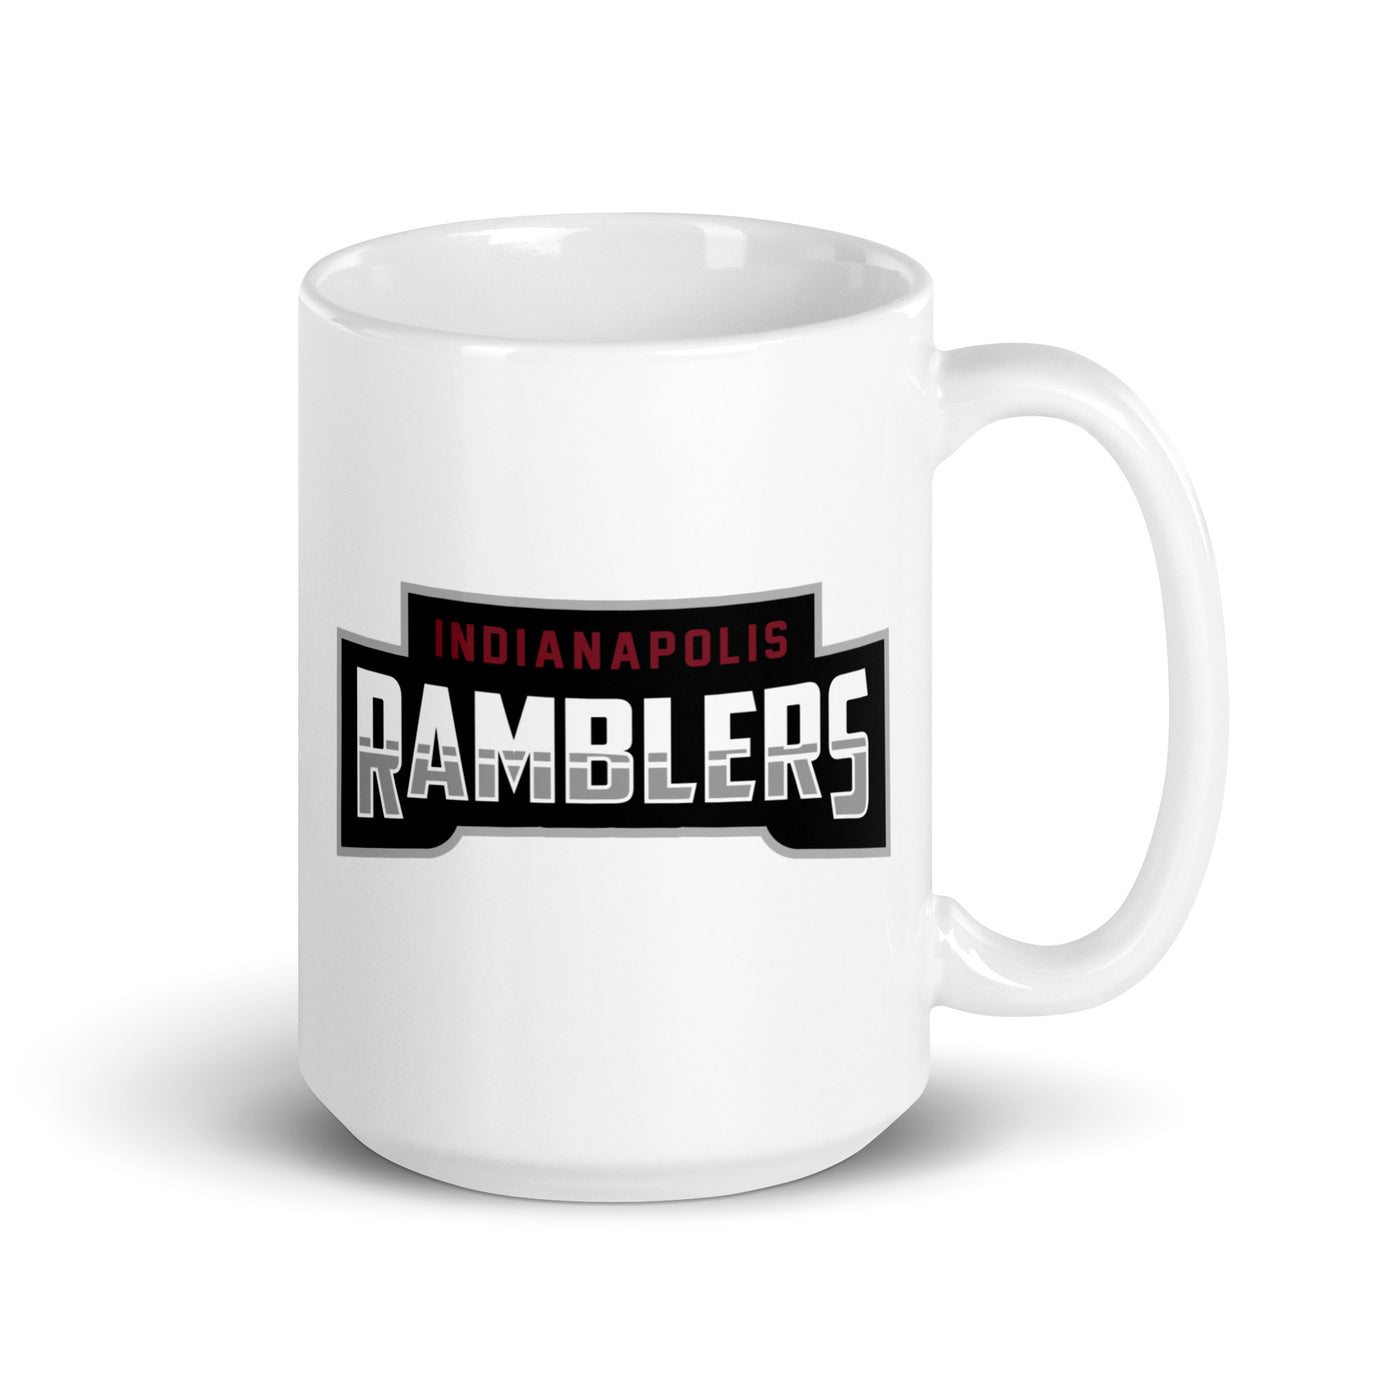 Indianapolis Ramblers White glossy mug